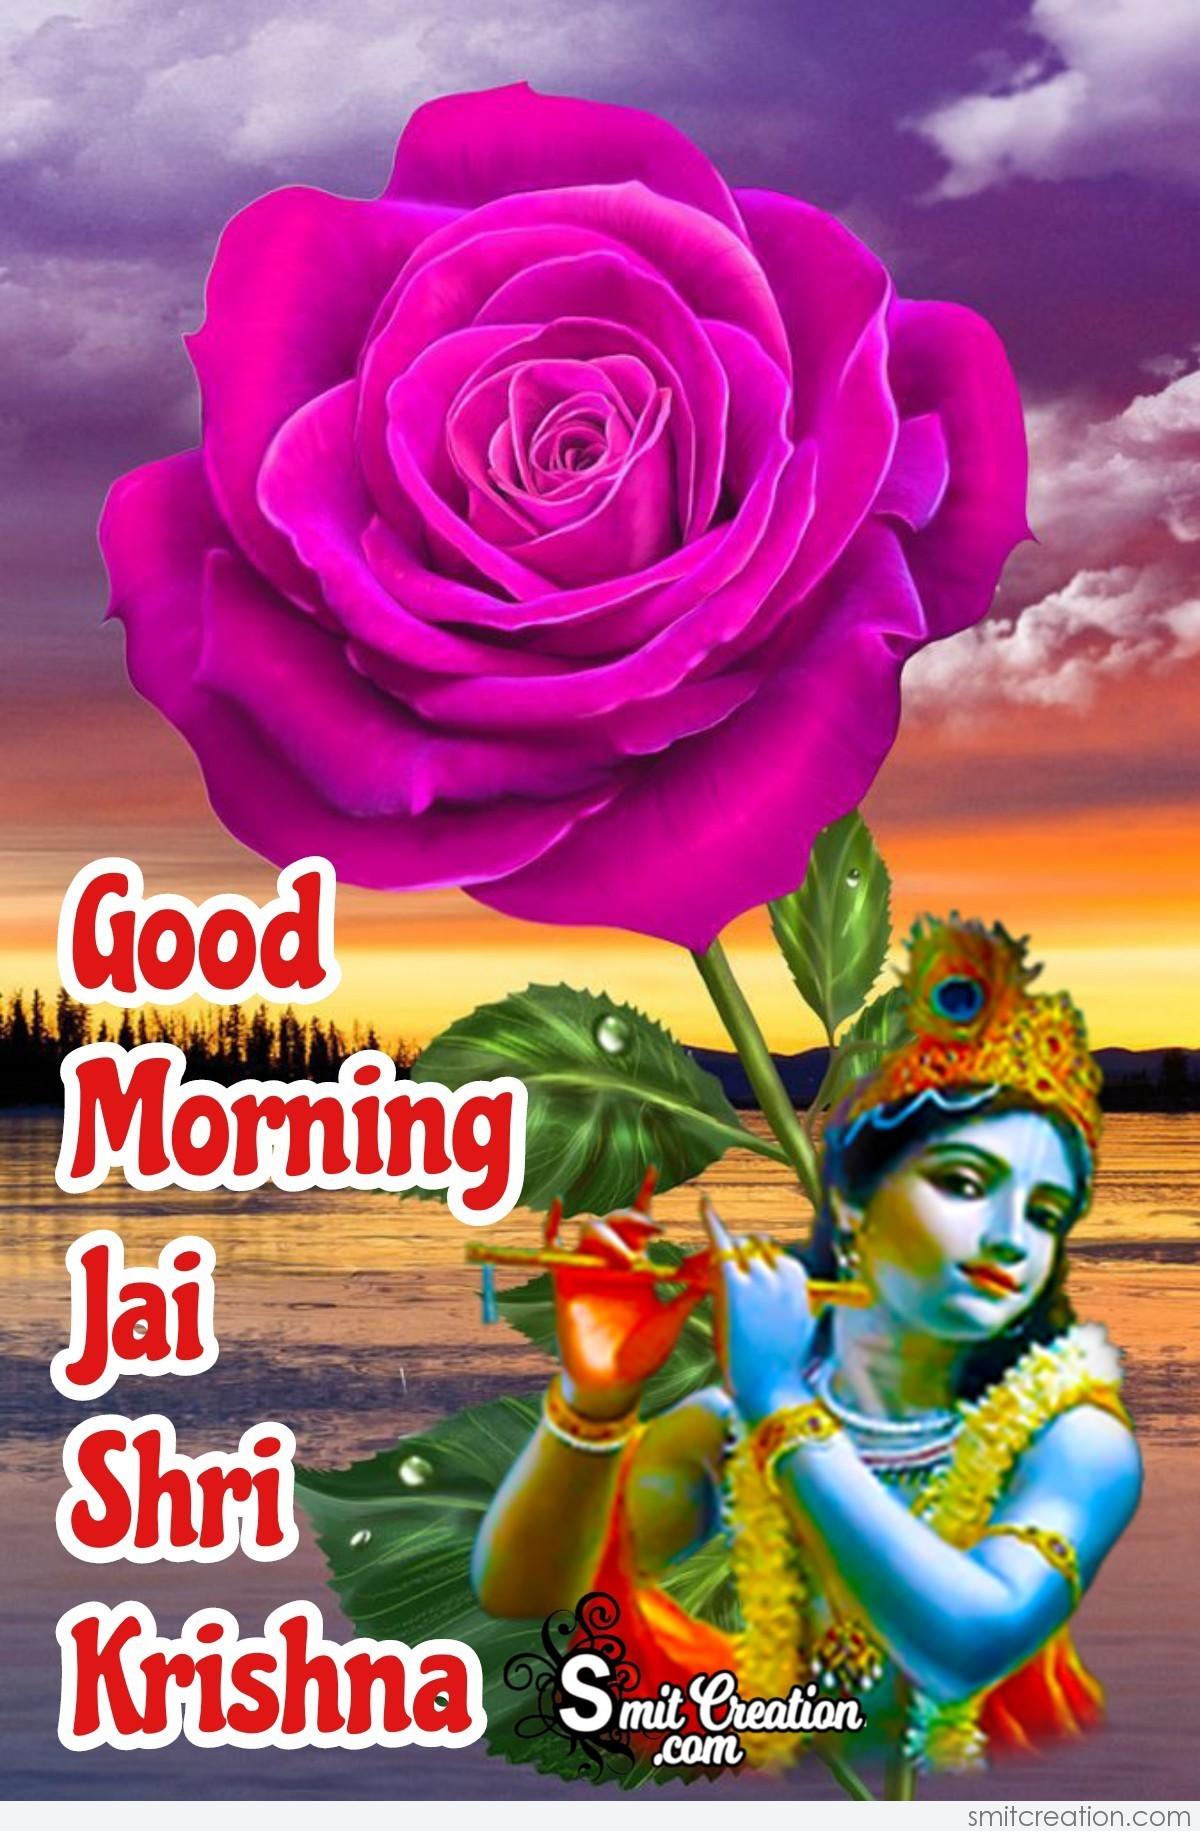 jai shree krishna good morning images download